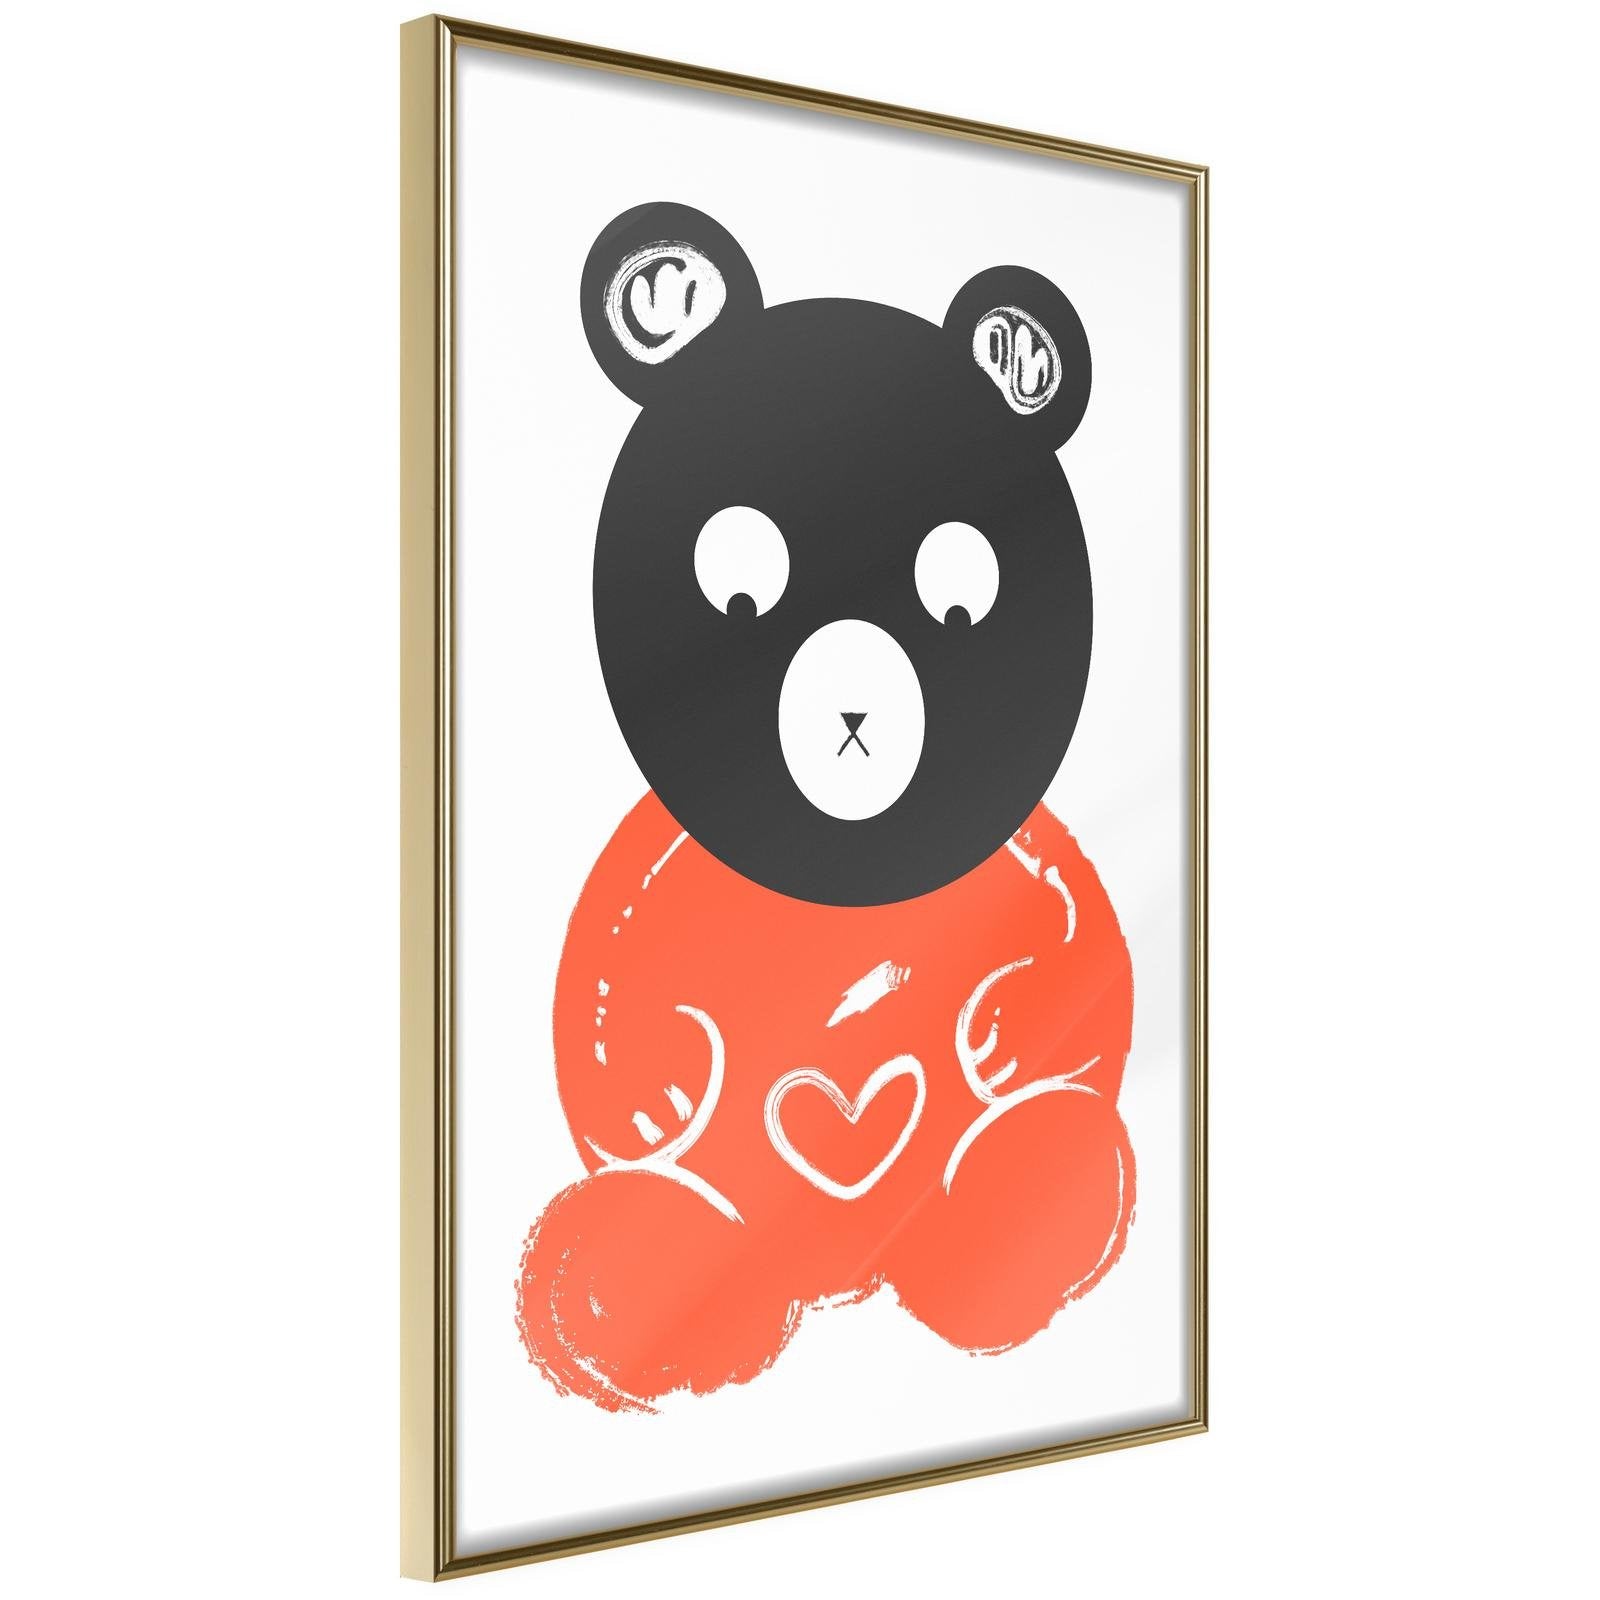 Inramad Poster / Tavla - Teddy Bear in Love - 20x30 Guldram